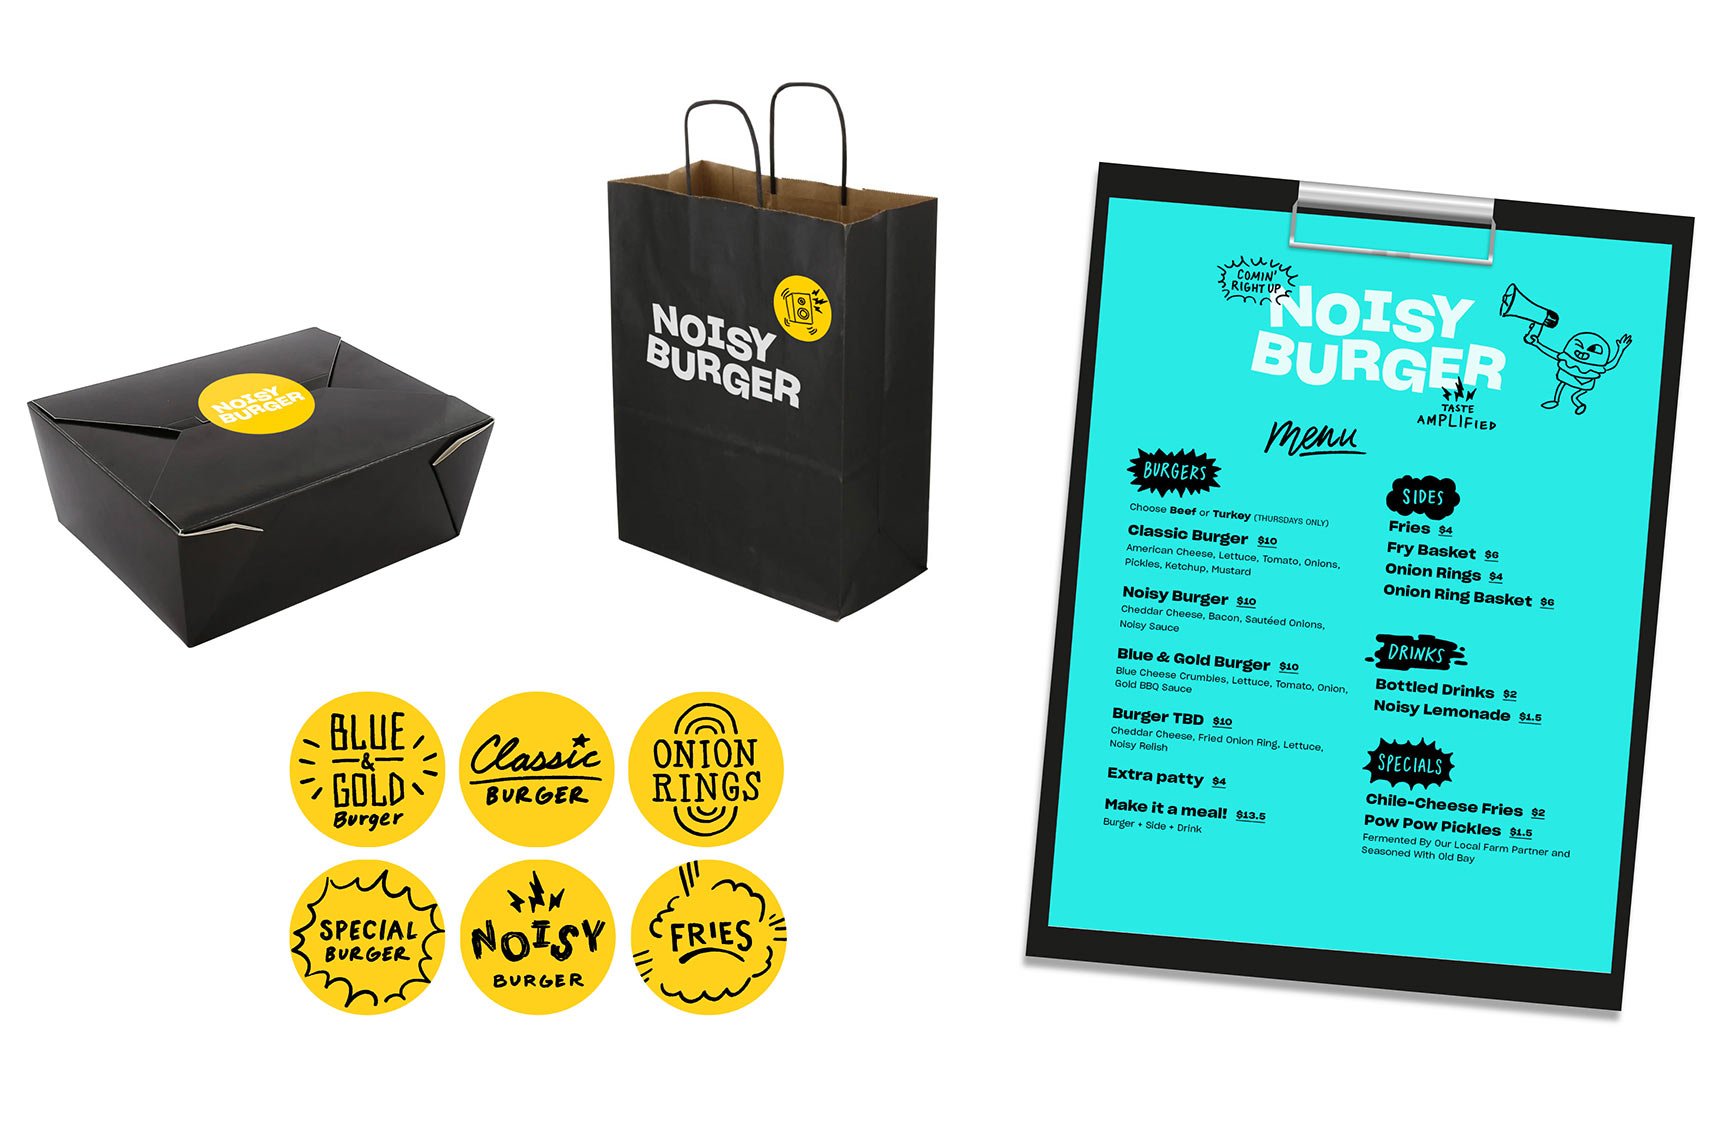 Noisy Burger packaging and menu concepts